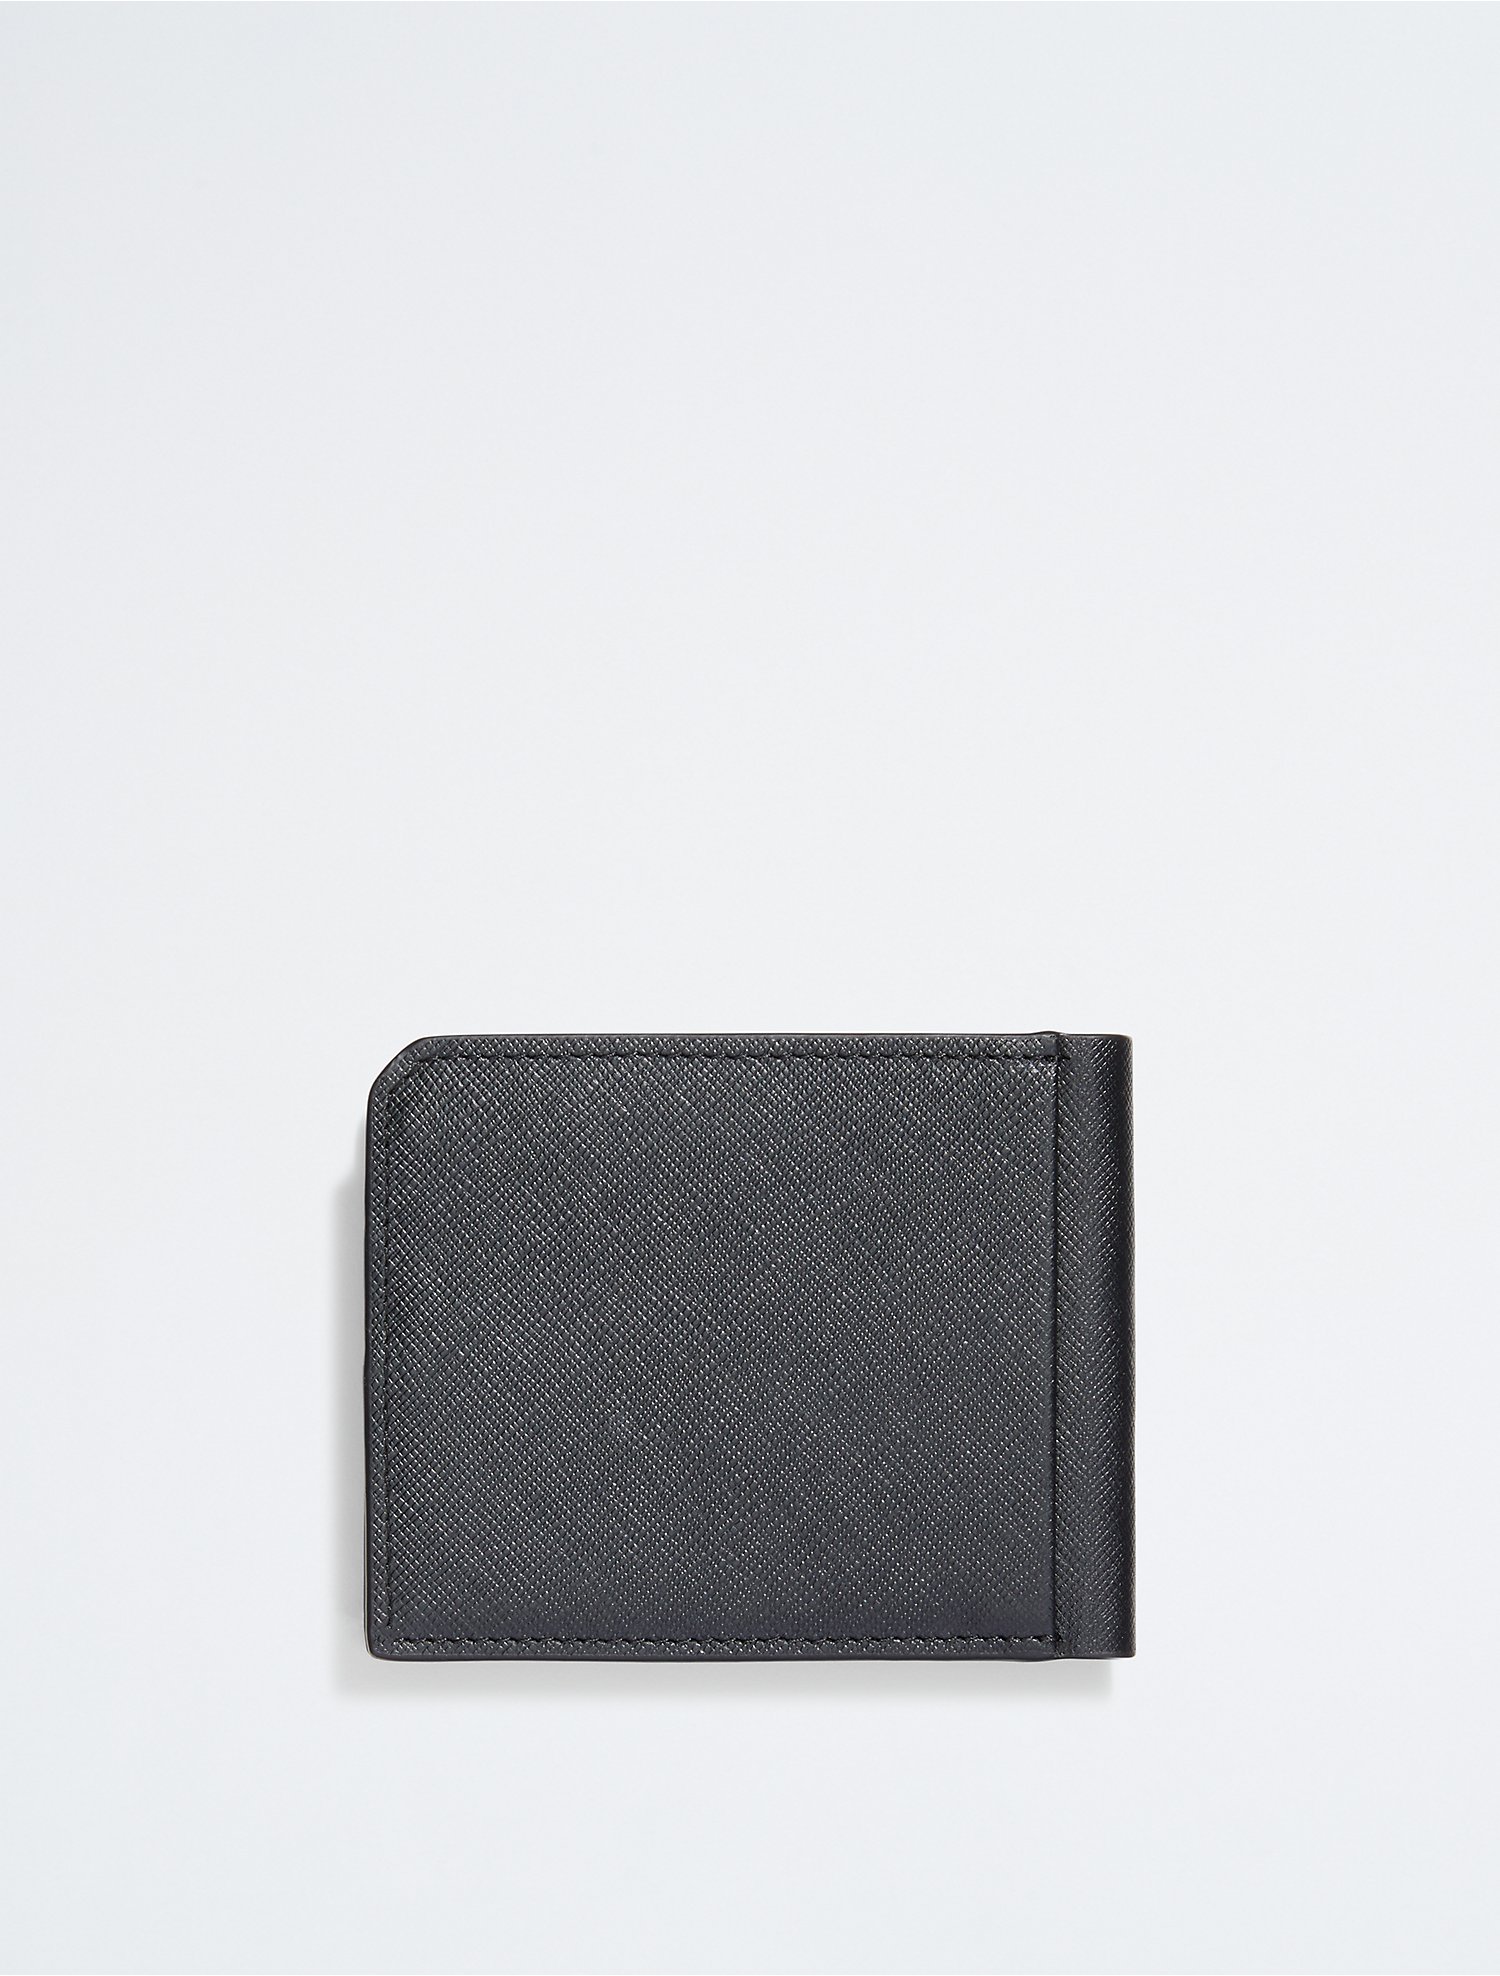 hun leven Sanctie Saffiano Leather Coin Pouch Bifold Wallet | Calvin Klein